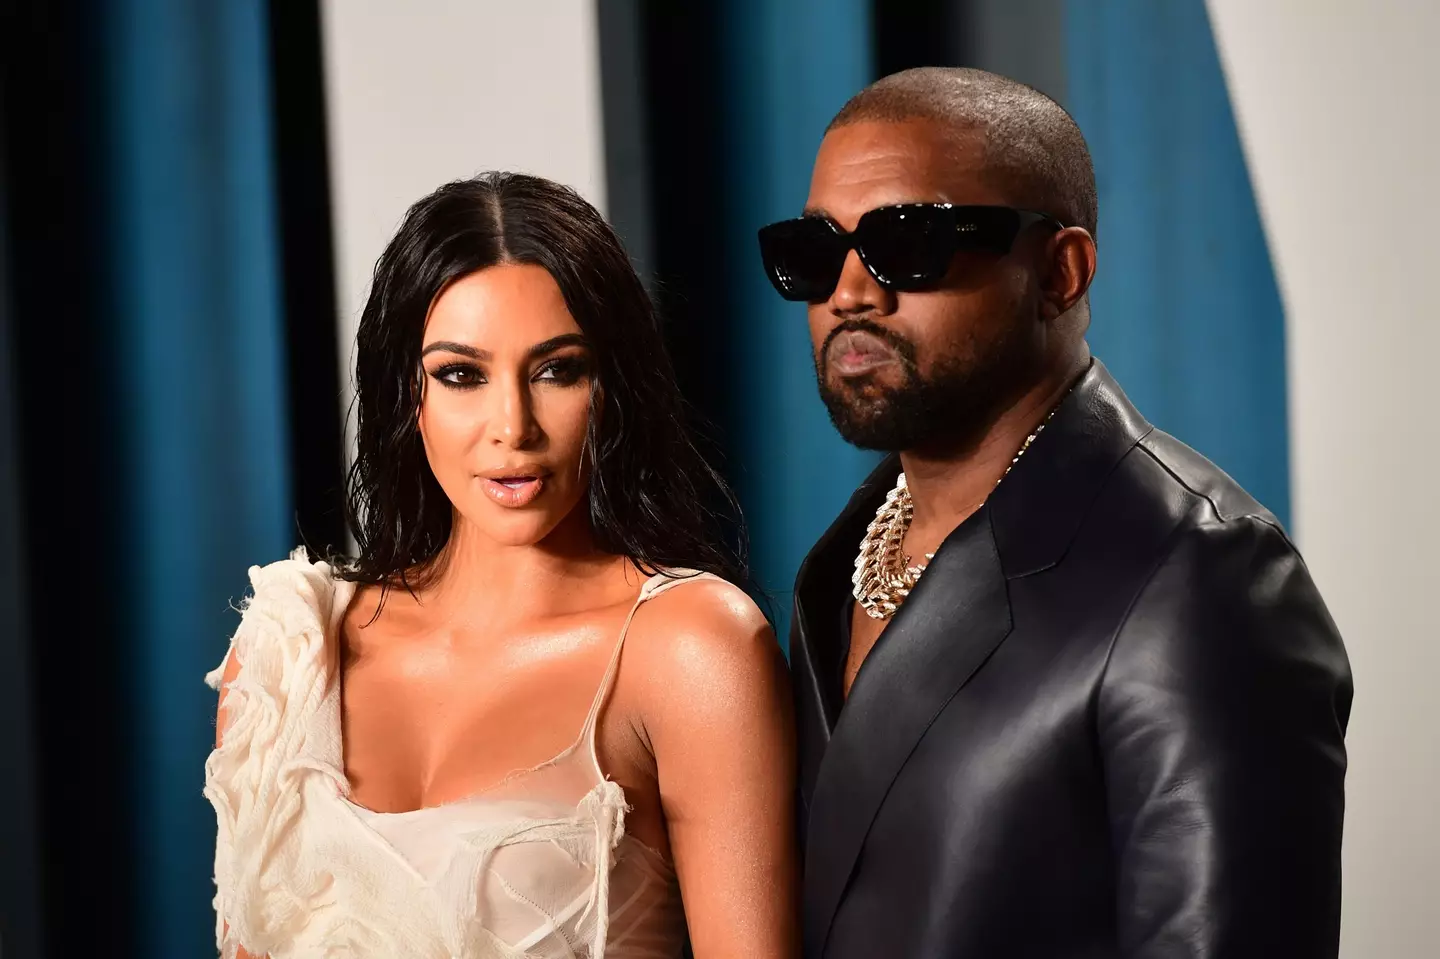 Kim filed for divorce in 2021 from rapper Kanye West.